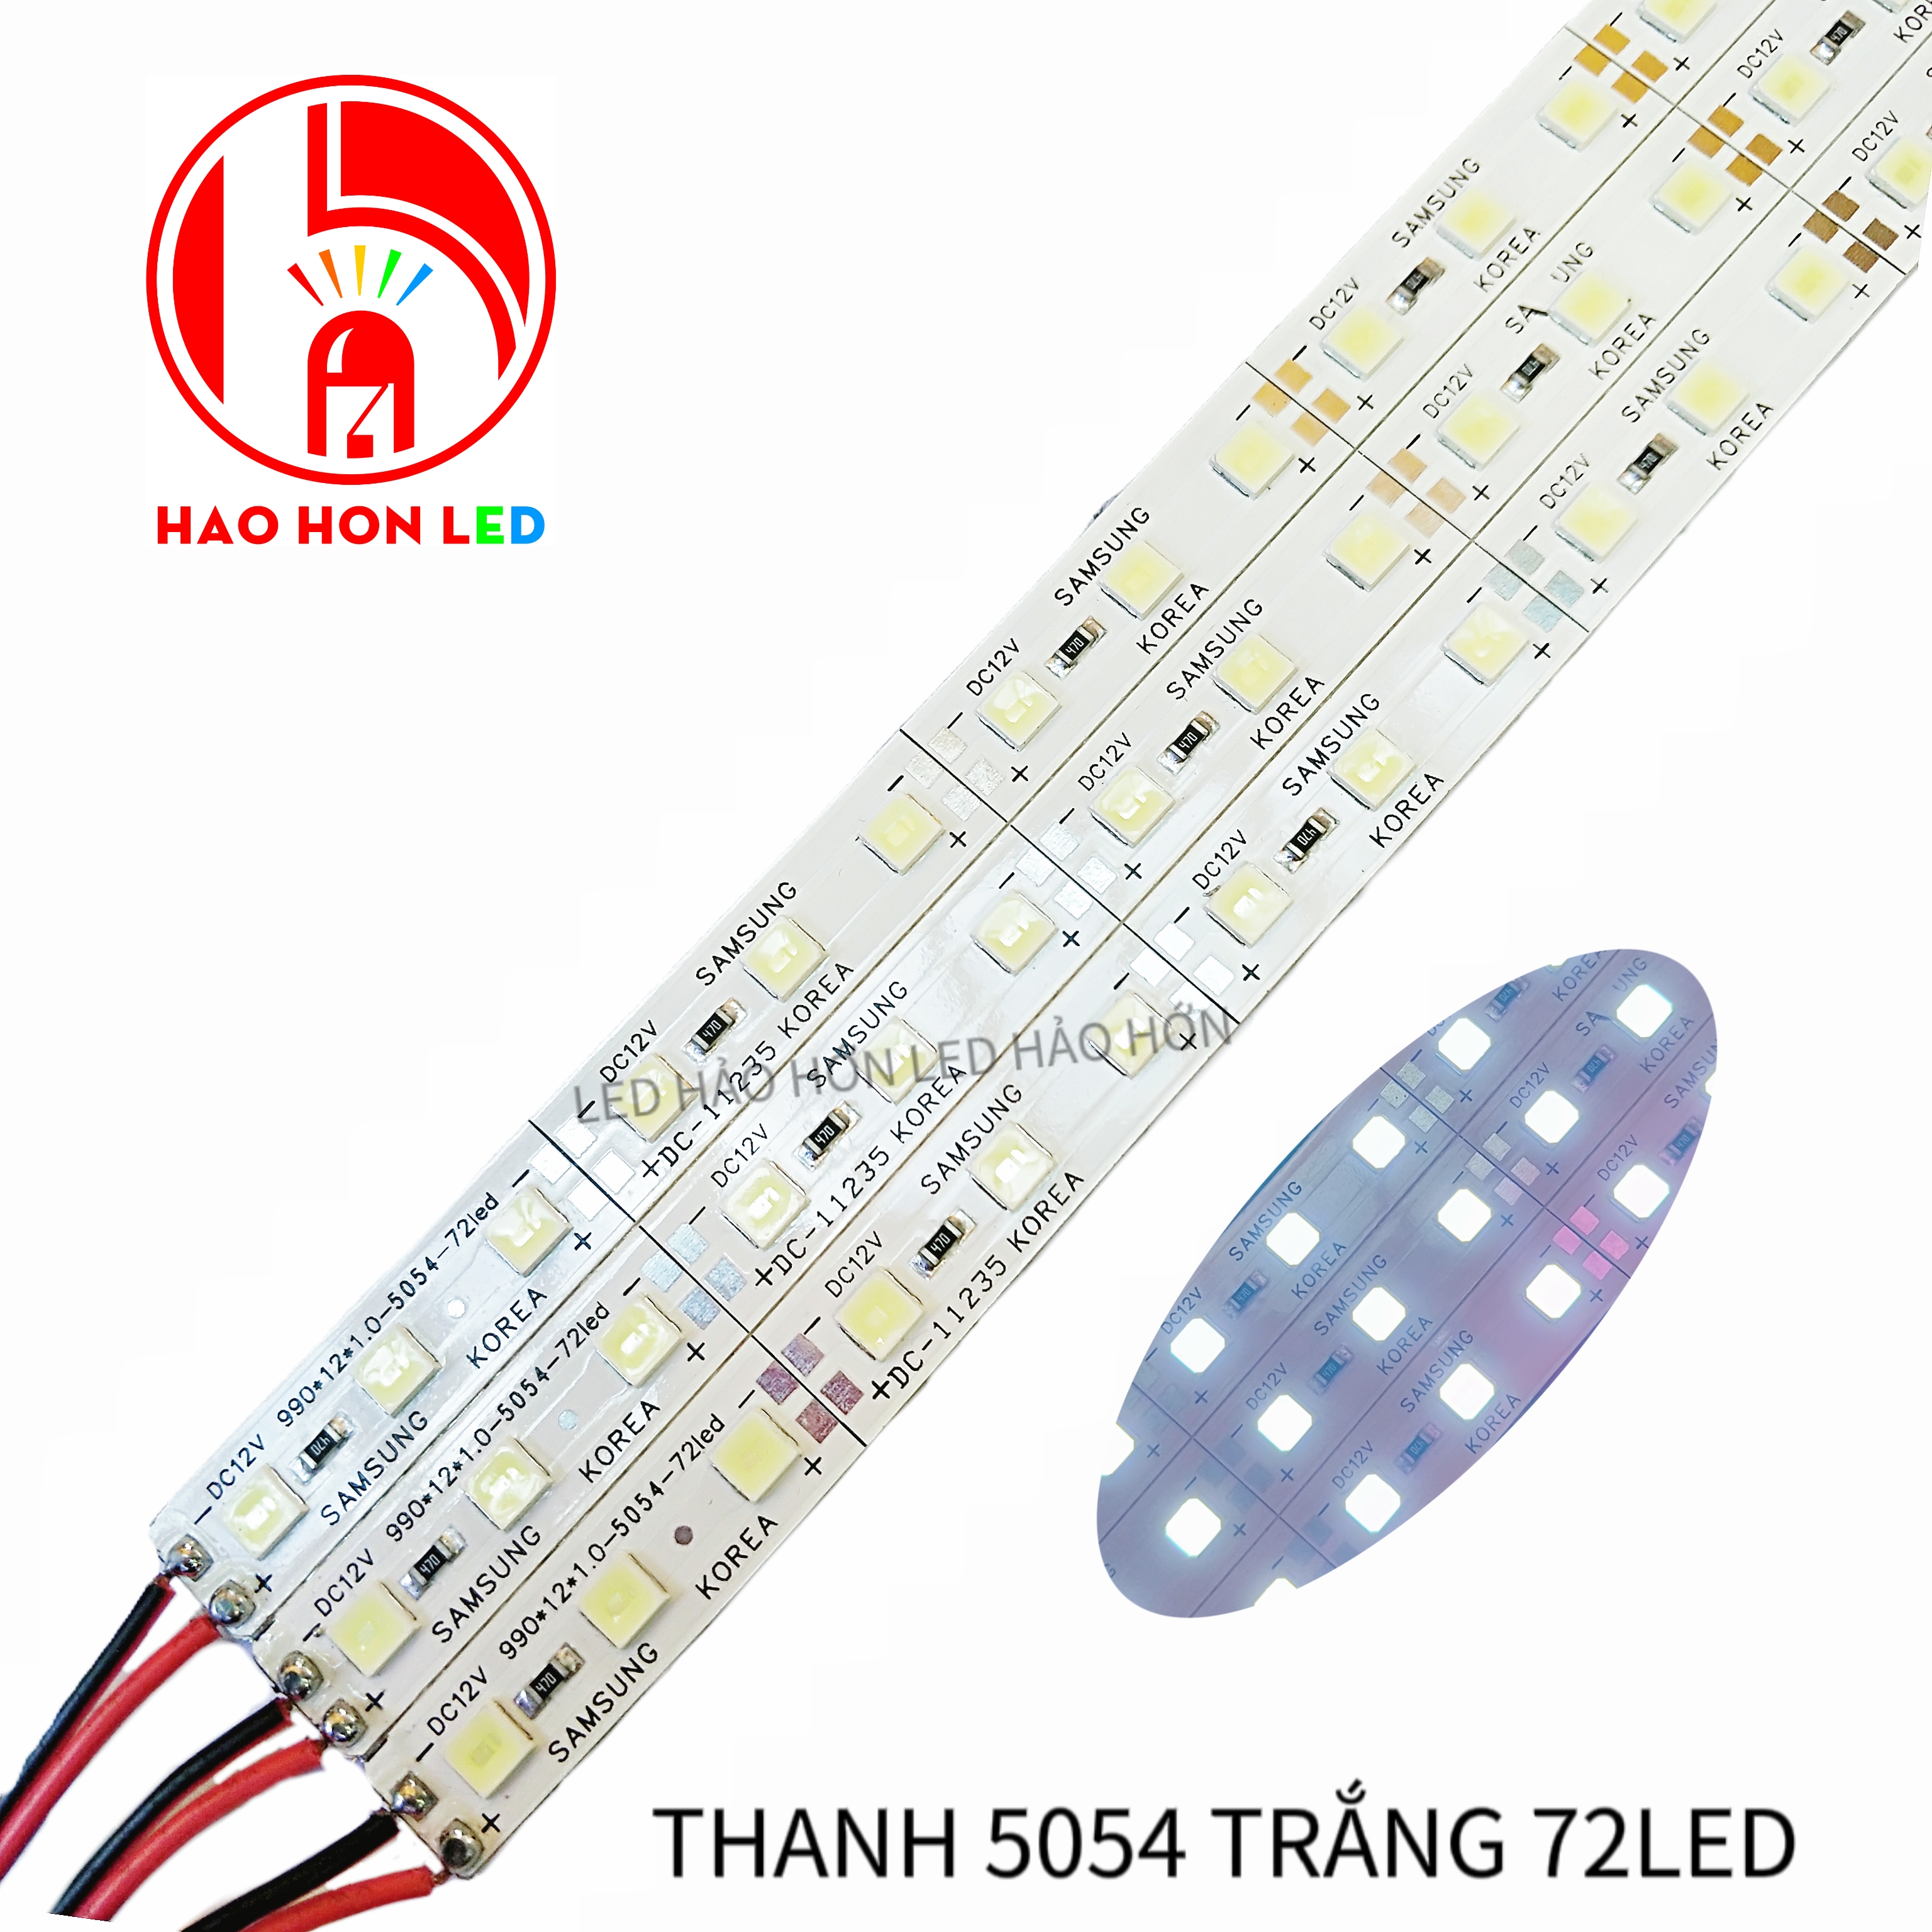 THANH 5054 TRẮNG 72LED 12V